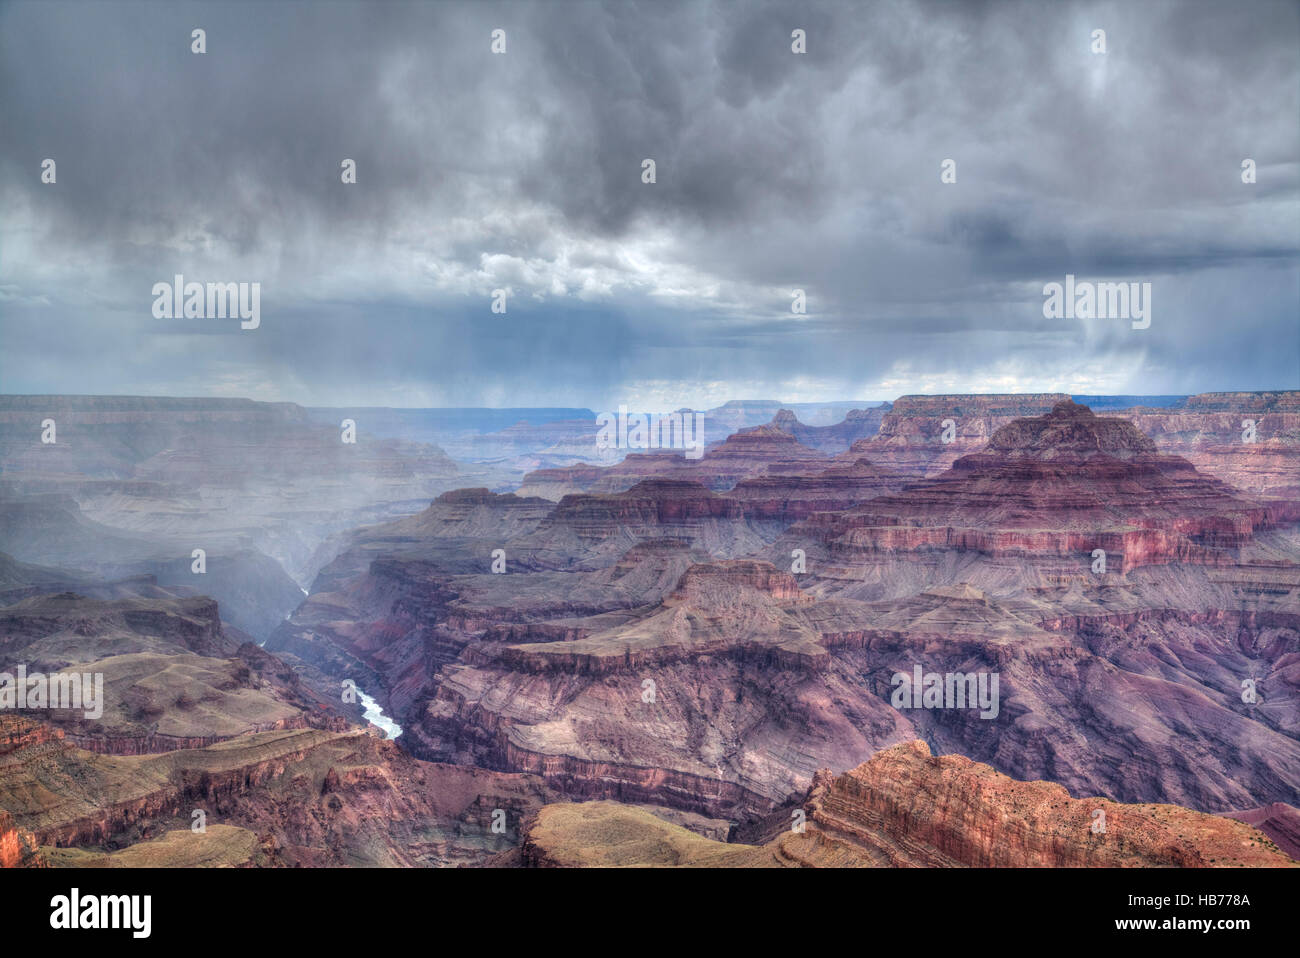 Afternoon thunderstorm, Colorado River below, South Rim, Grand Canyon National Park, UNESCO World Heritage Site, Arizona, USA Stock Photo